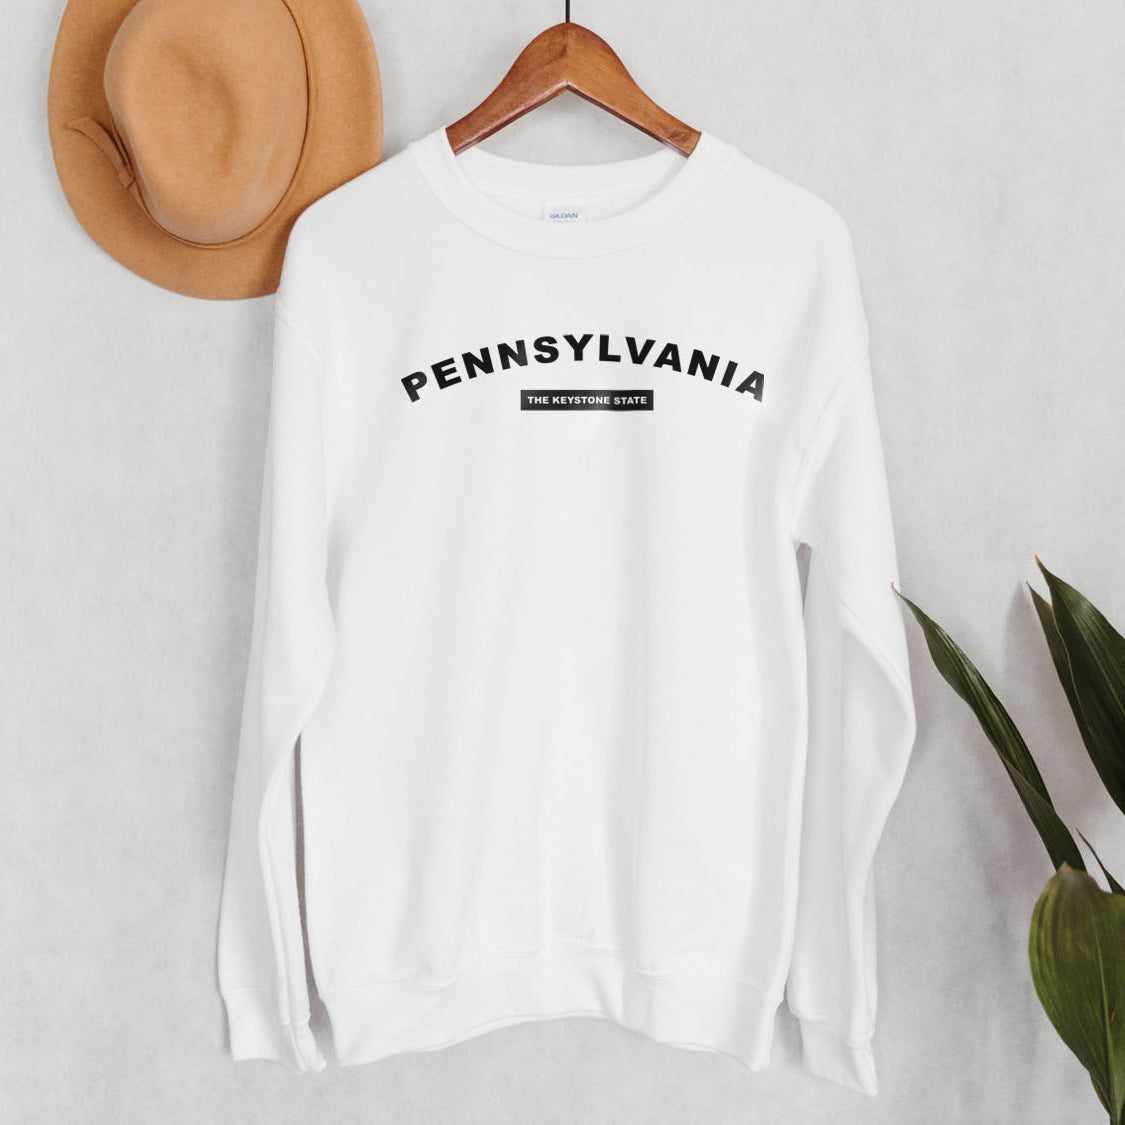 Pennsylvania The Keystone State Sweatshirt - United States Name & Slogan Minimal Design Printed Sweatshirt